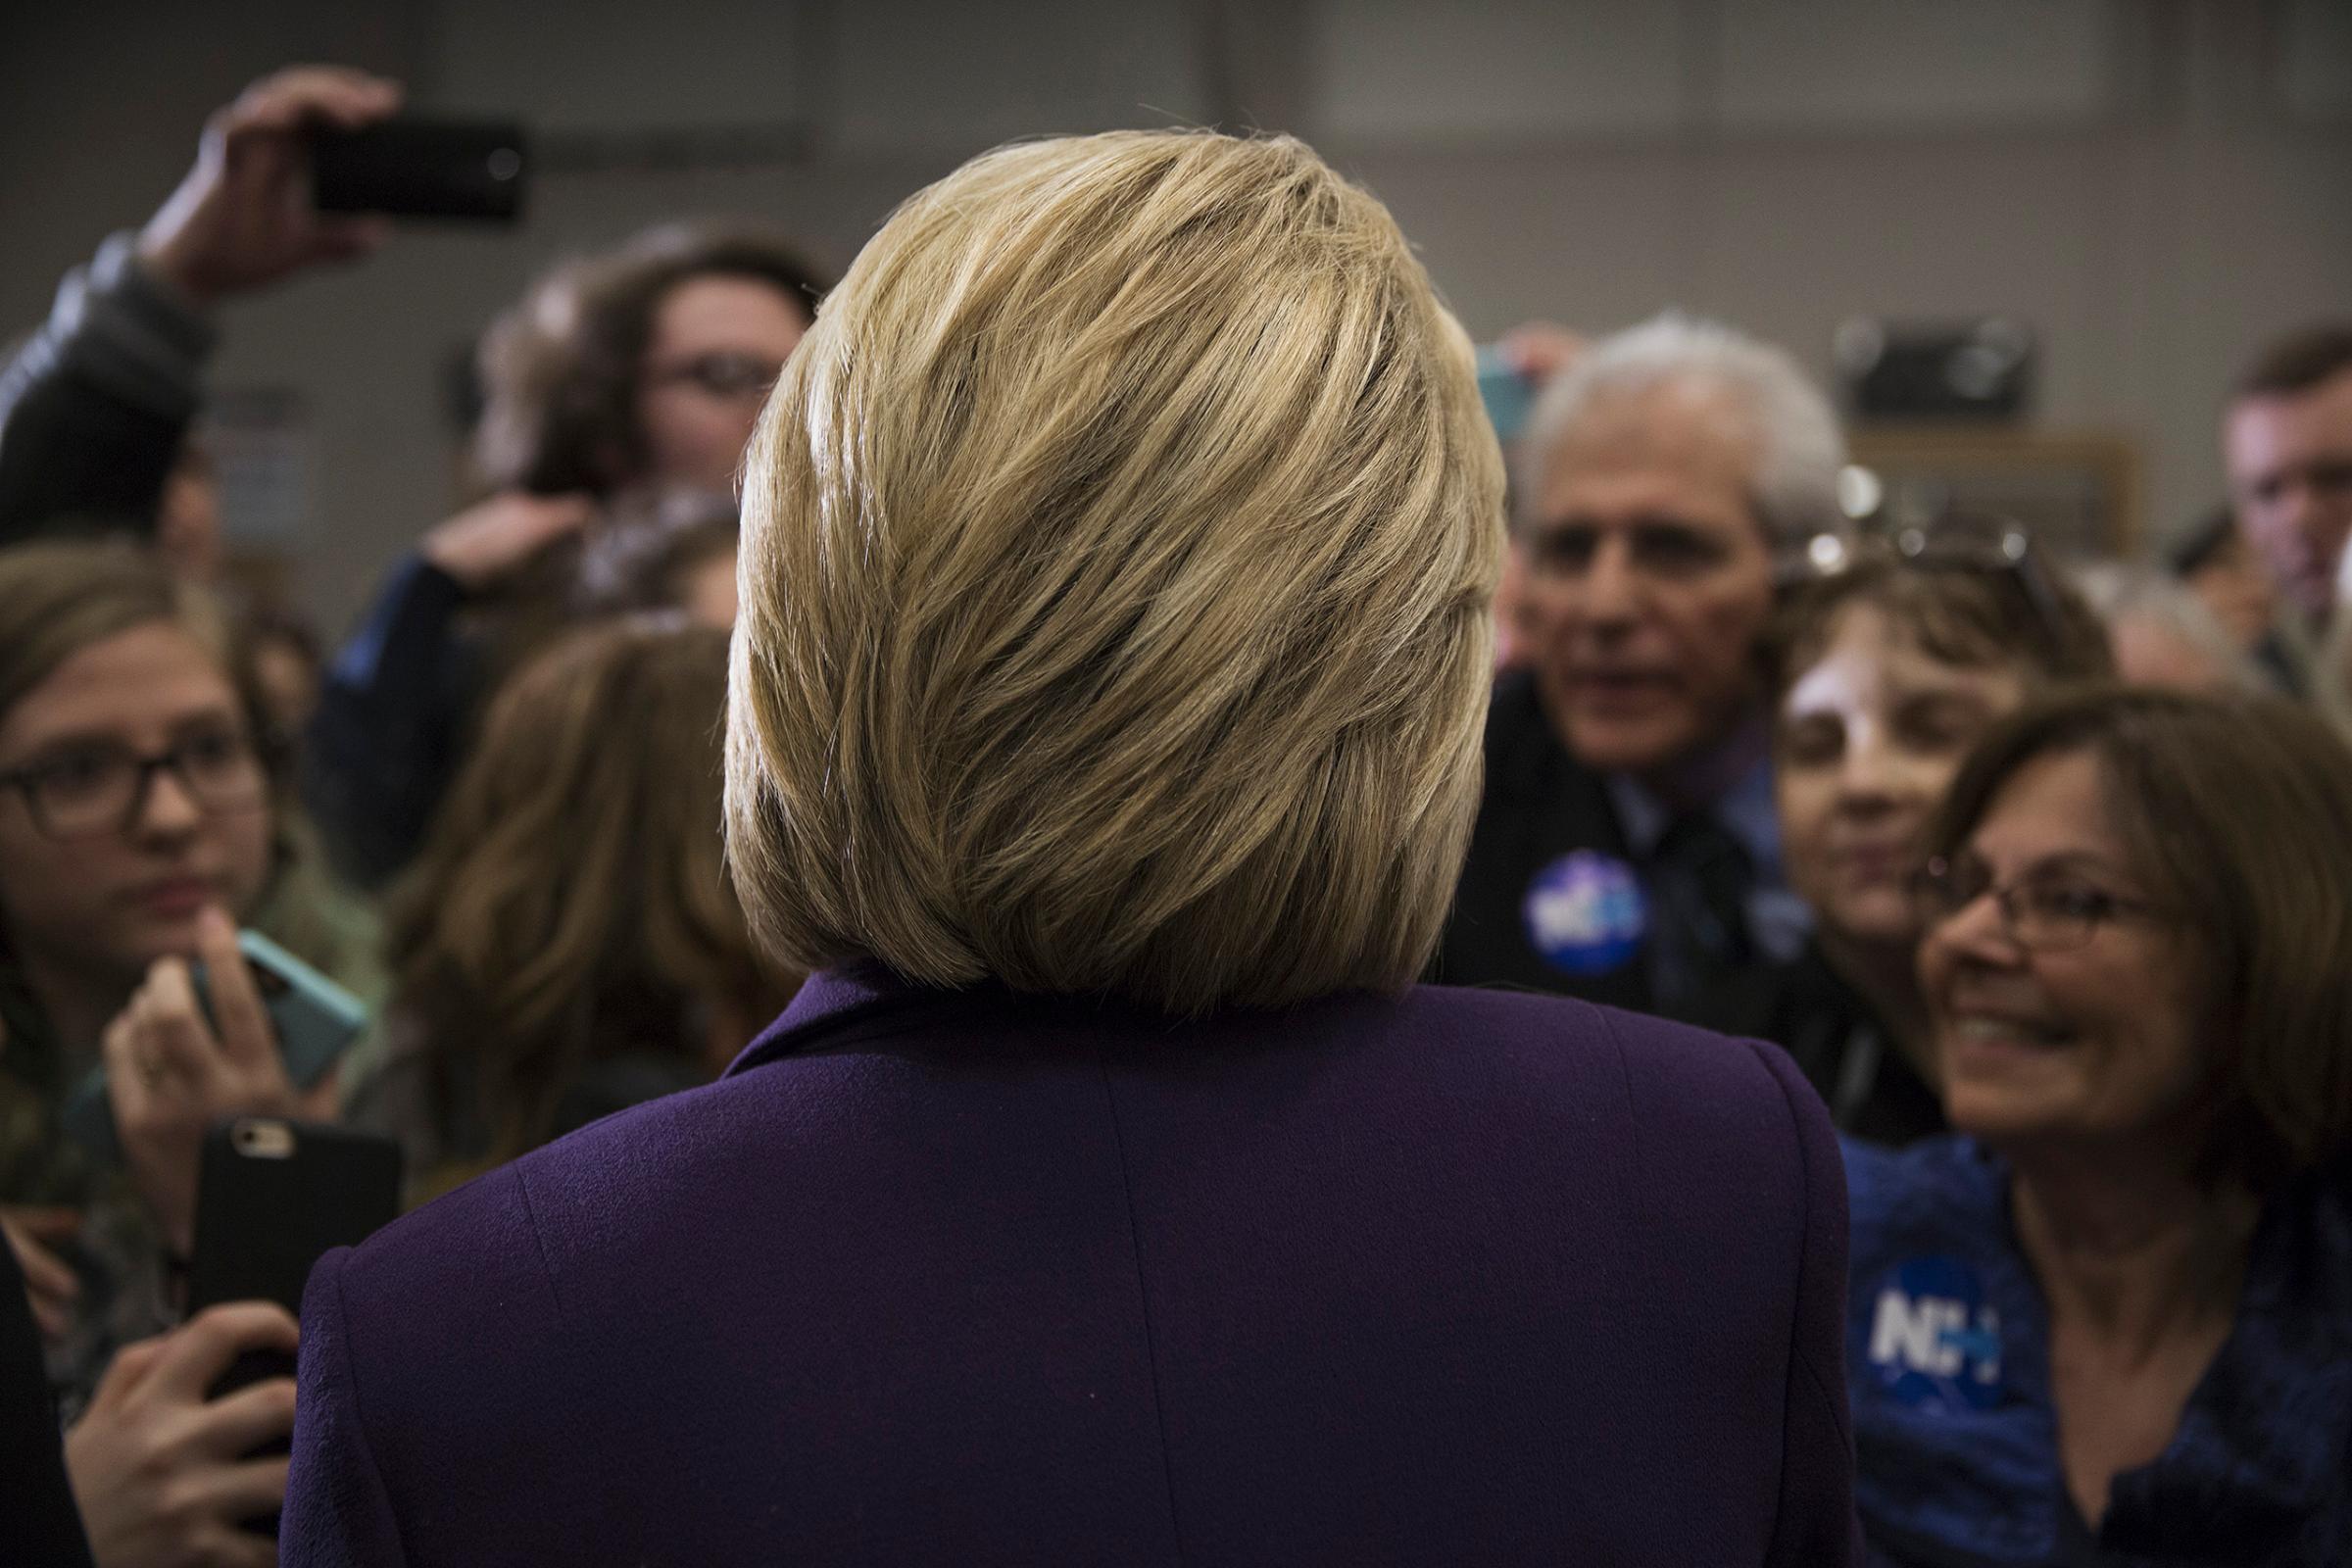 Hillary Clinton campaigns at Winnacunnet High School in Hampton, N.H. on Feb. 3, 2016.